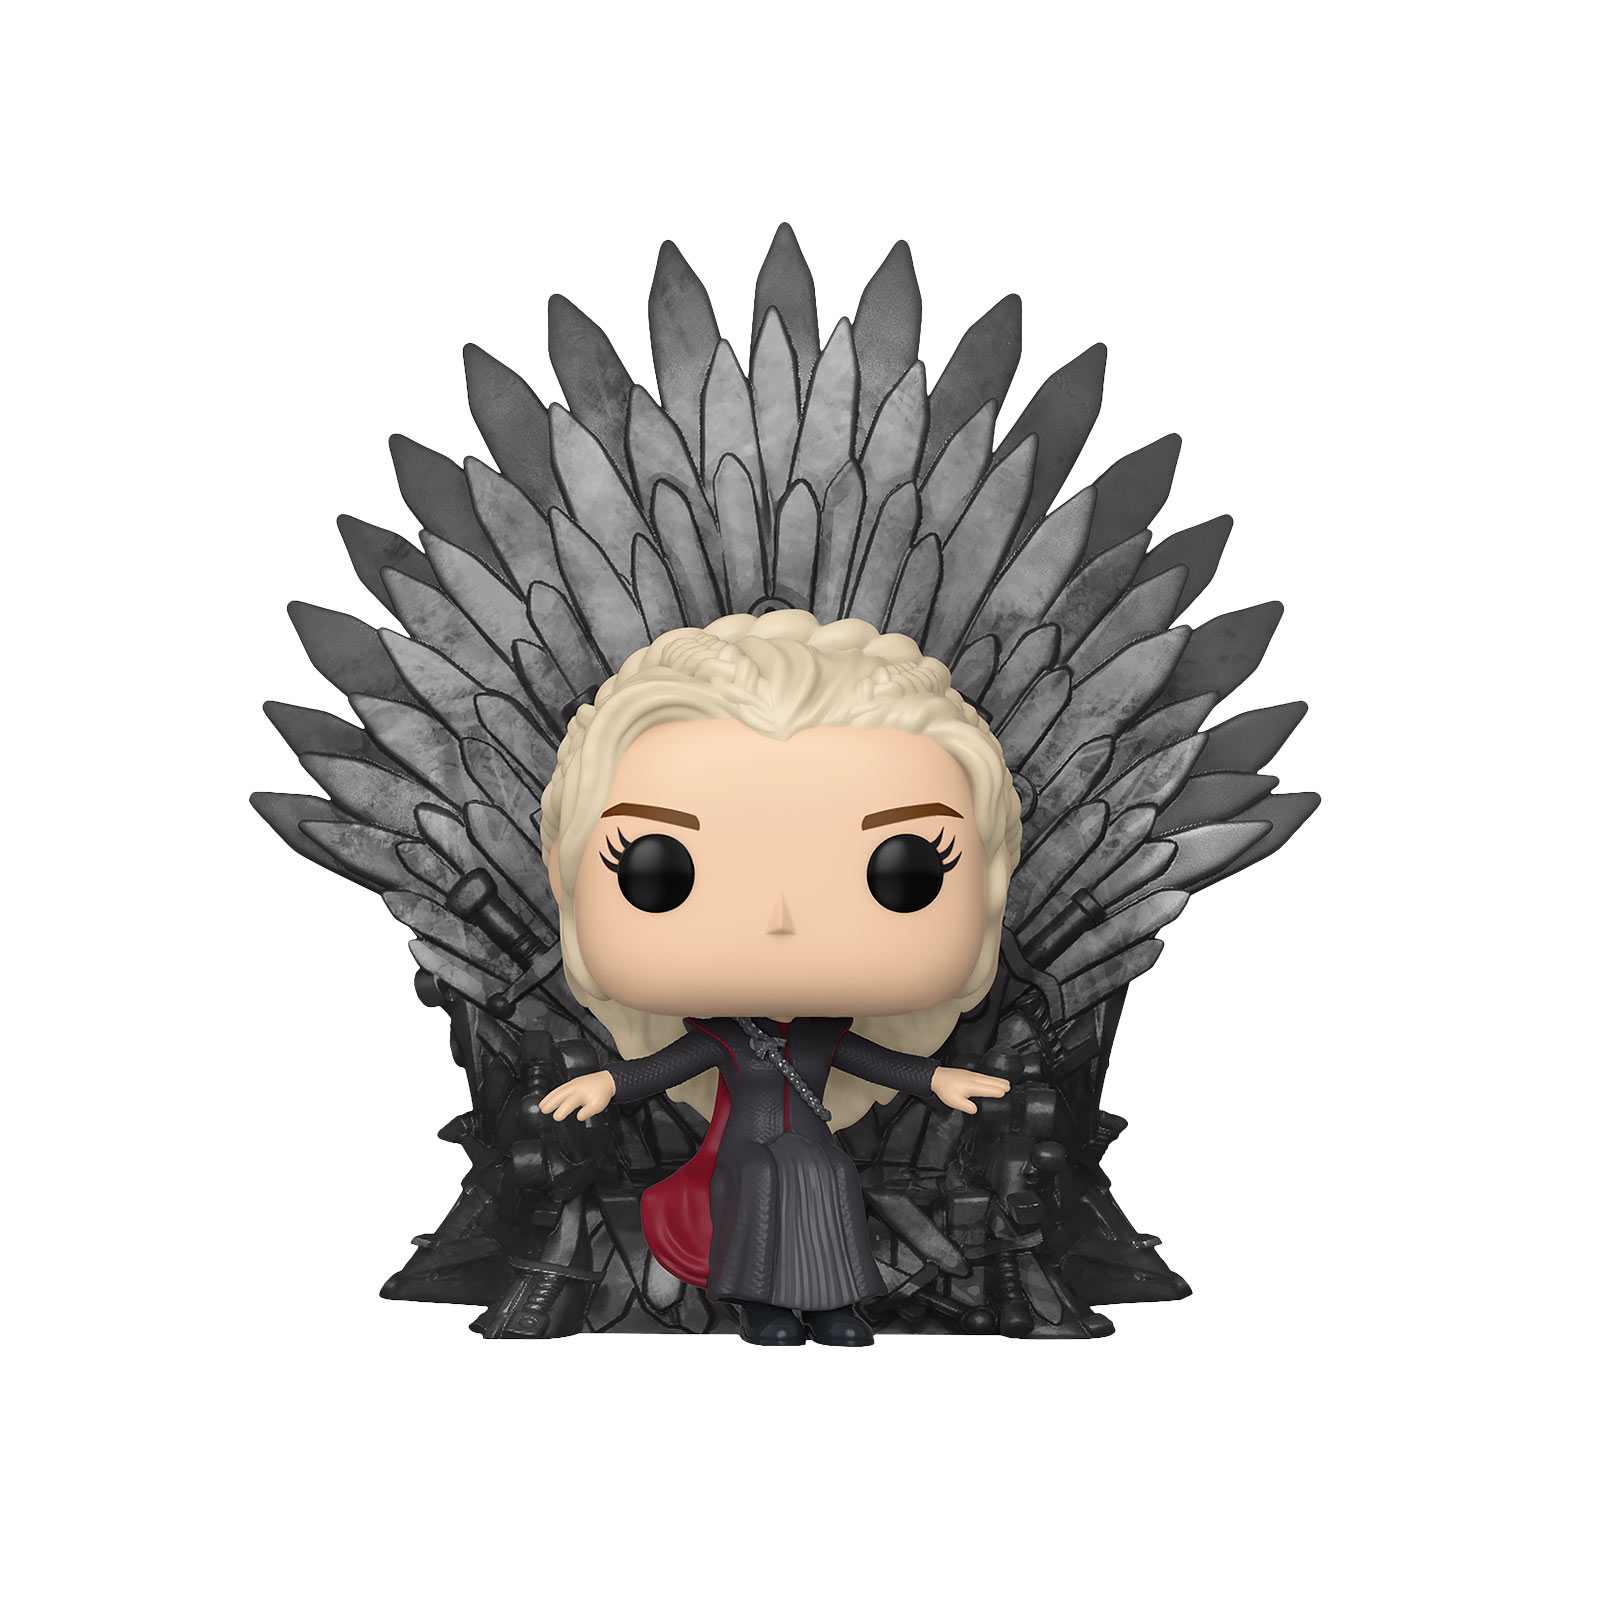 Game of Thrones - Daenerys Targaryen mit Eisernem Thron Funko Pop Figur